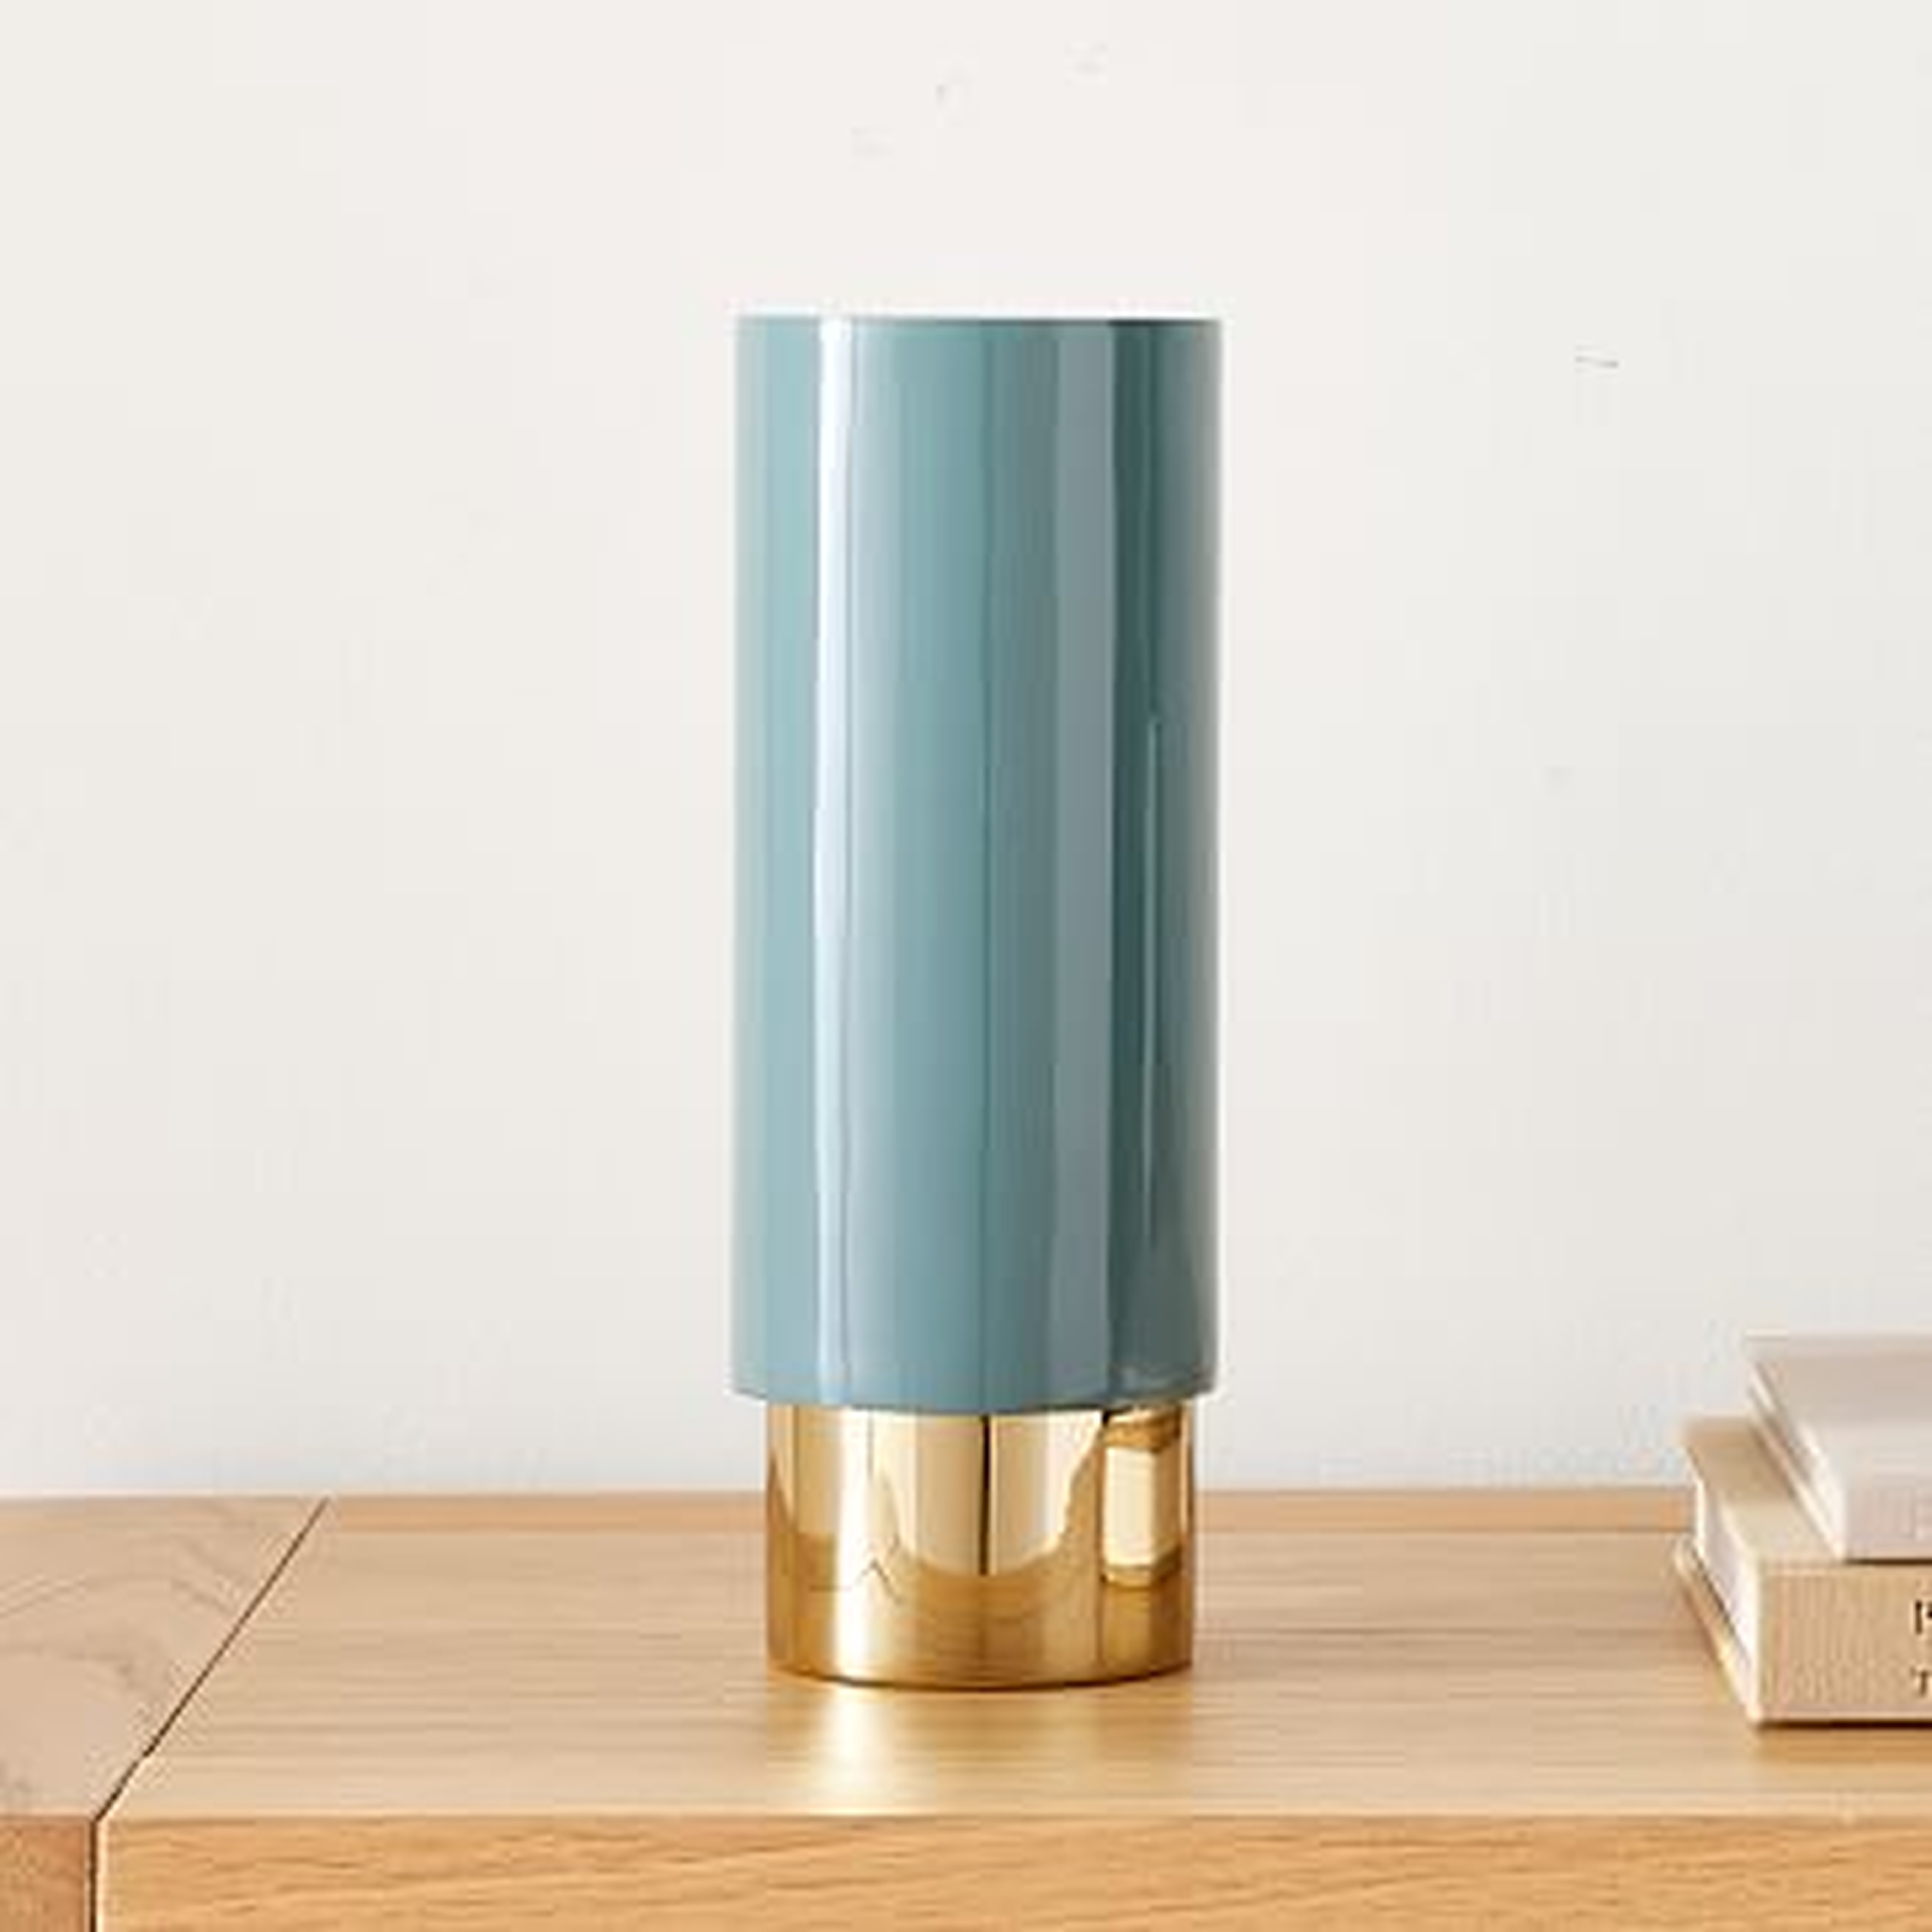 Brass & Enamel Tube Vase, Ocean, Large - West Elm